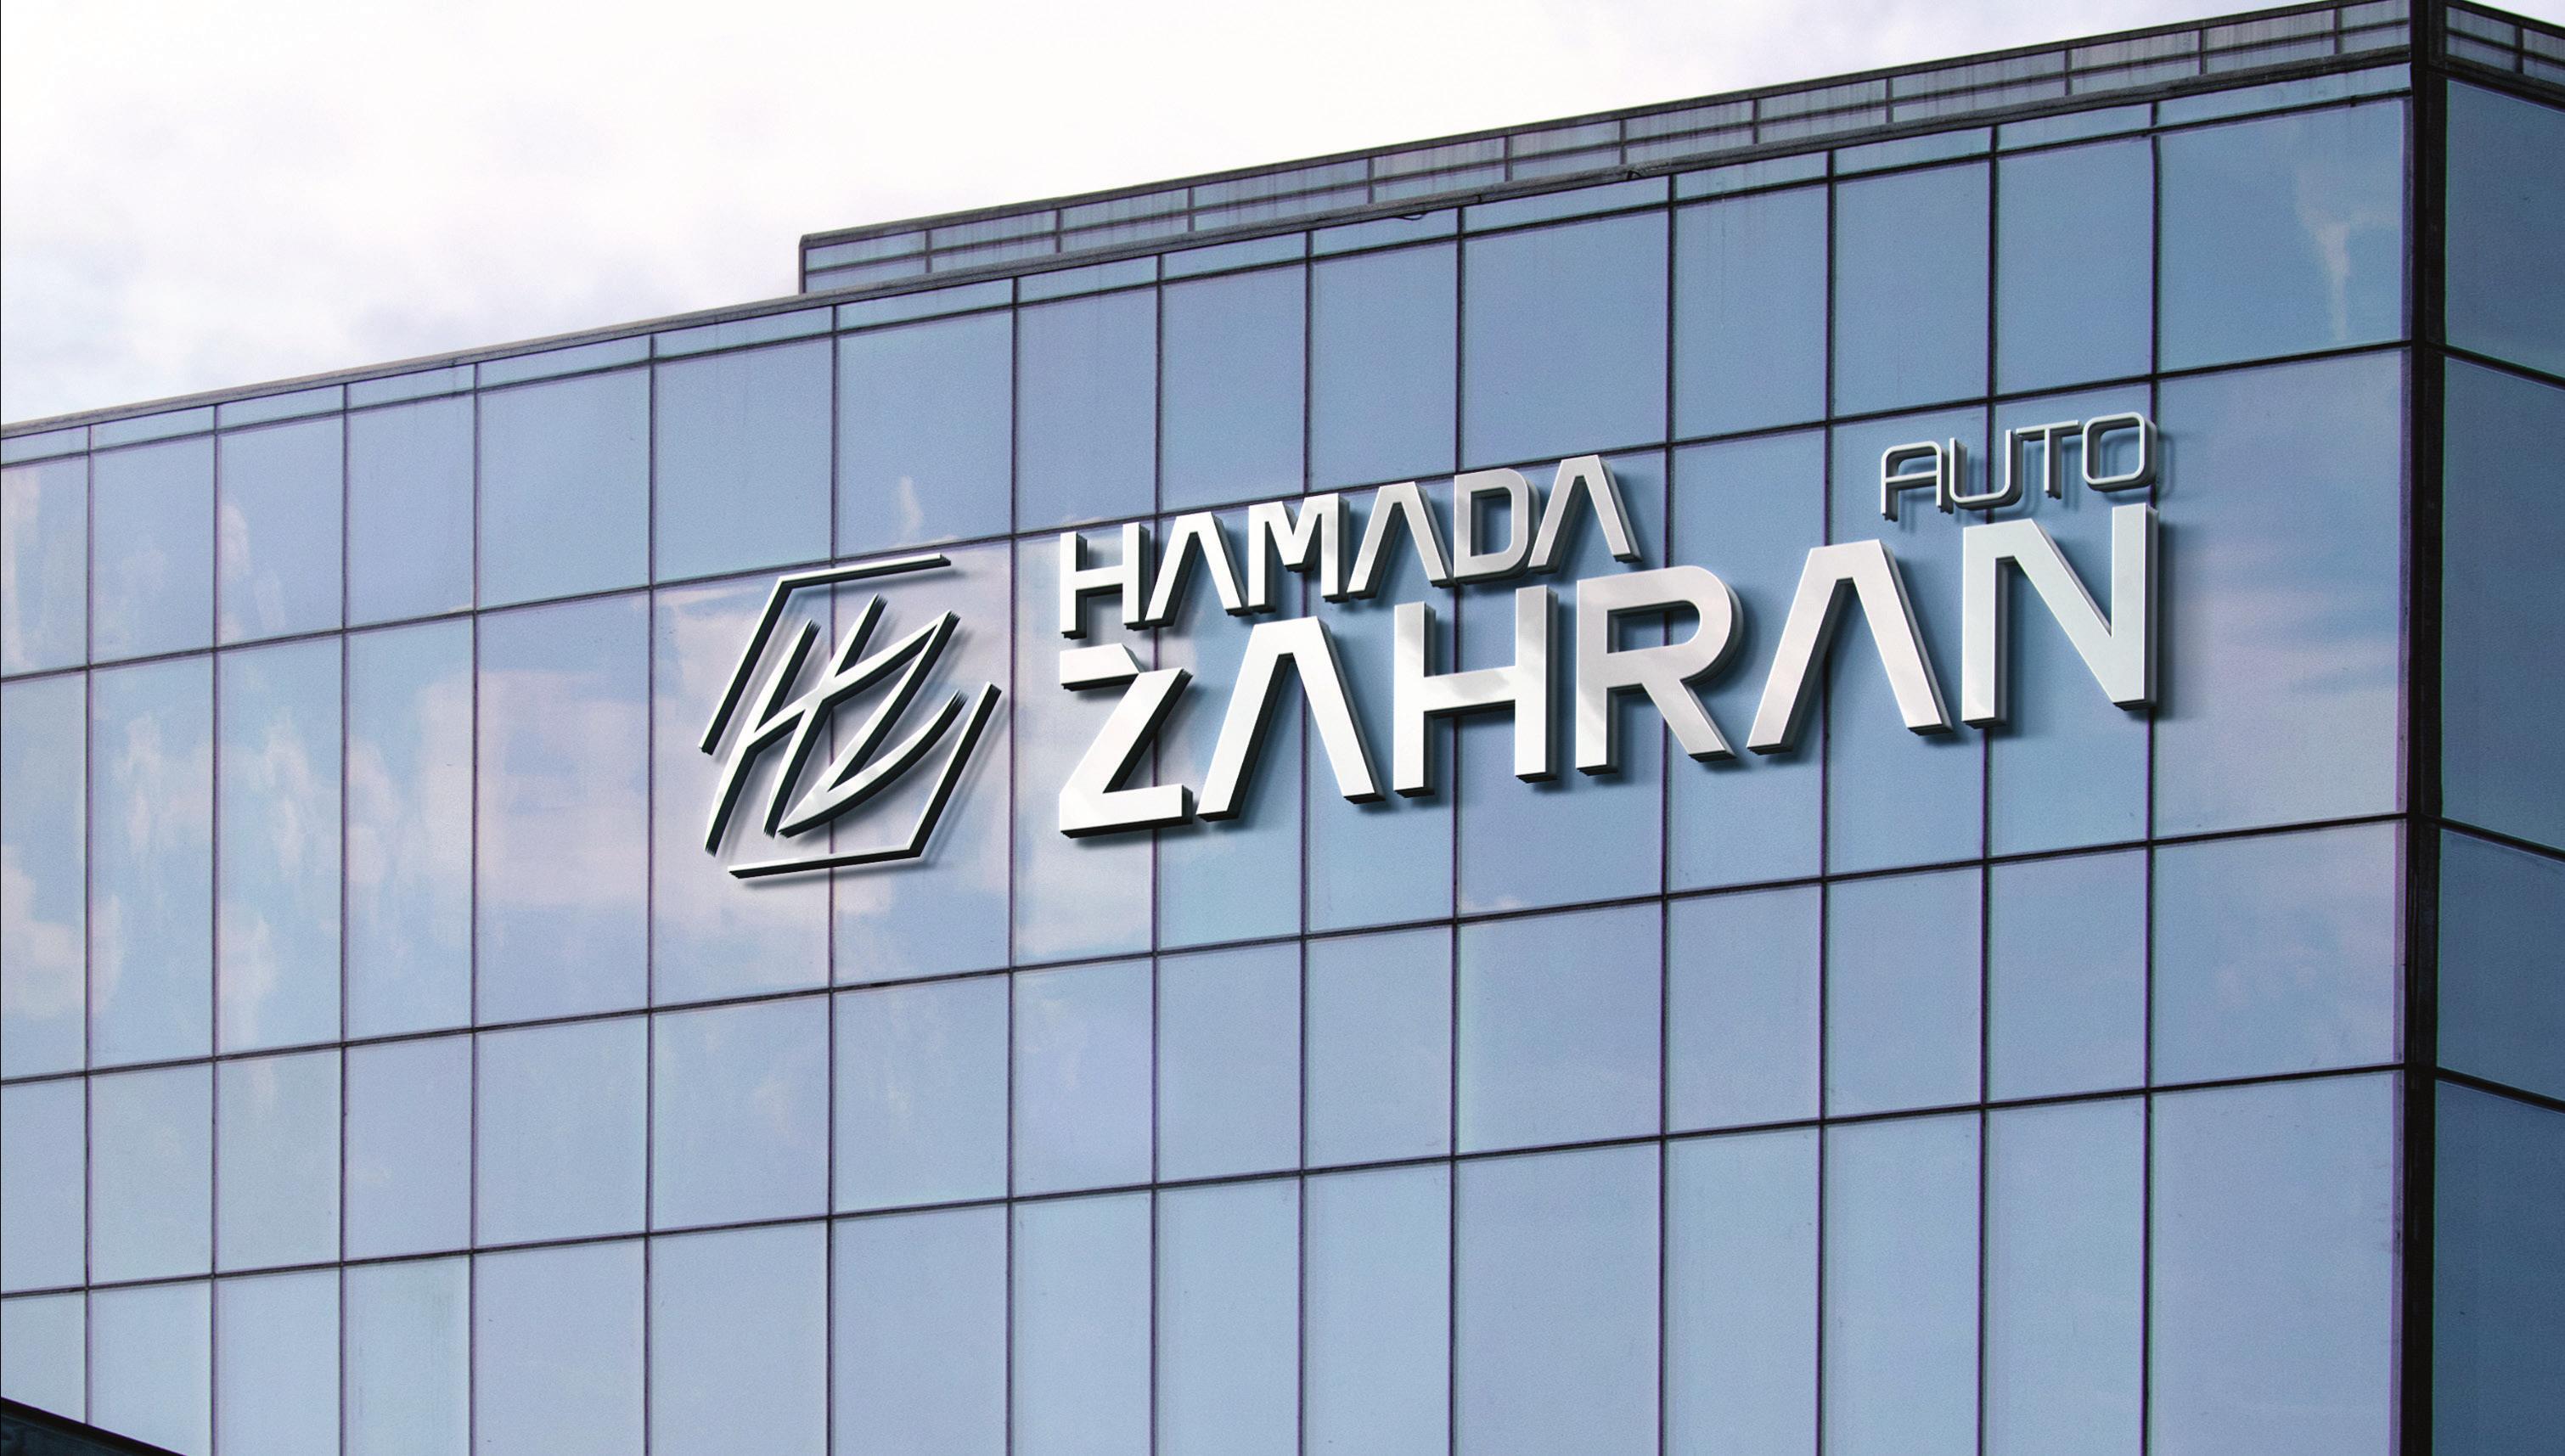 Hamada Zahran for importing medically equipped cars